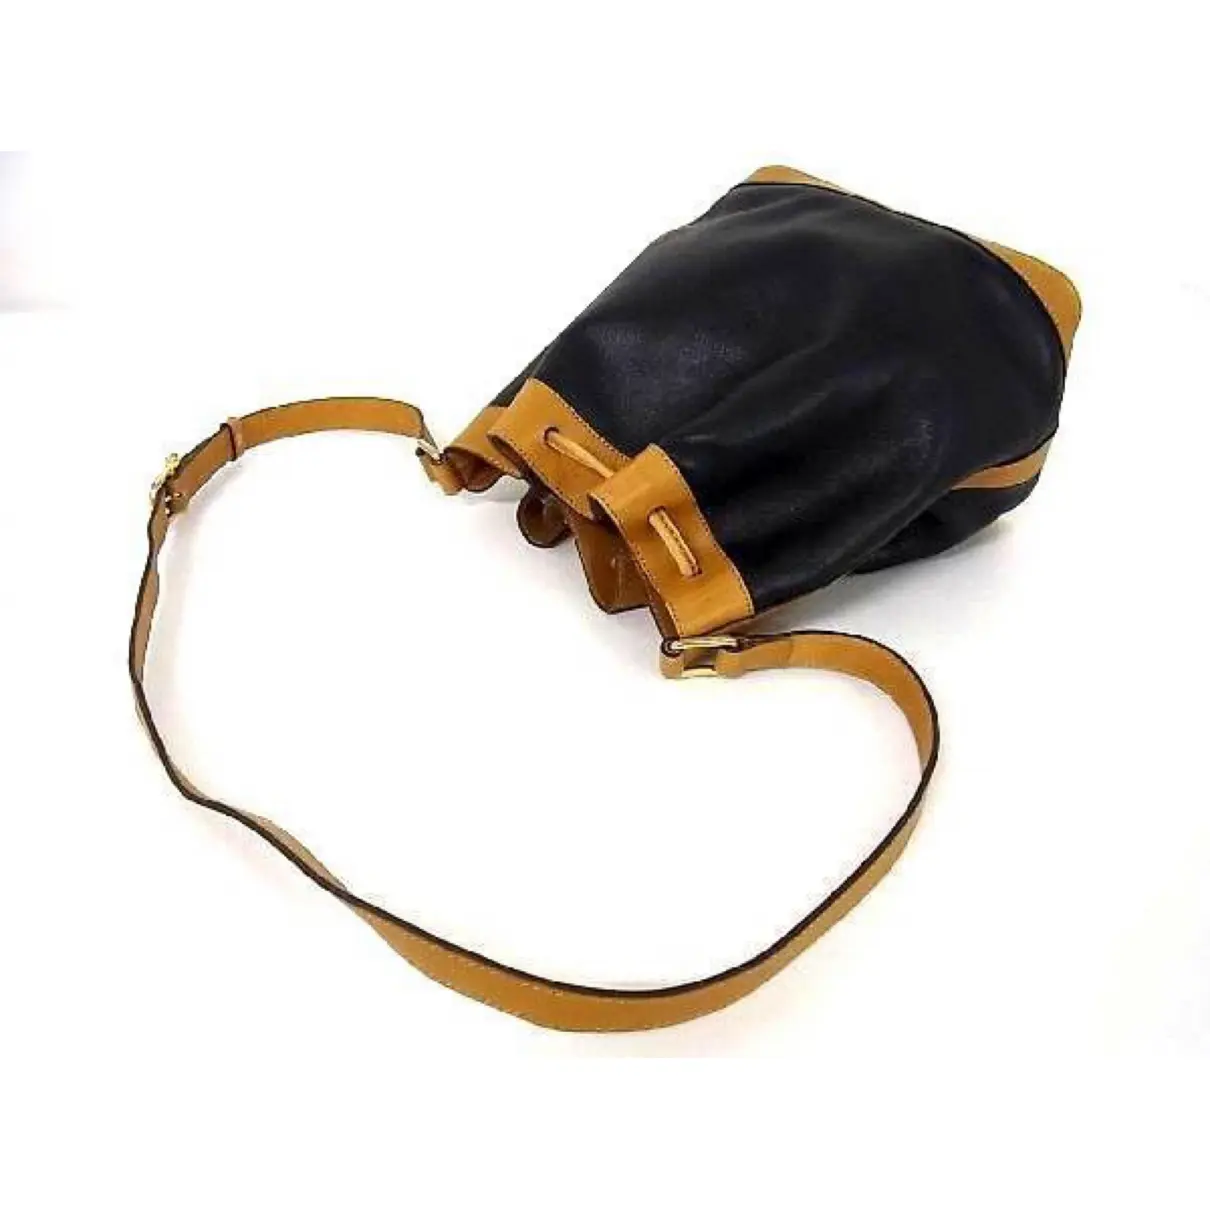 Buy Celine Triomphe leather handbag online